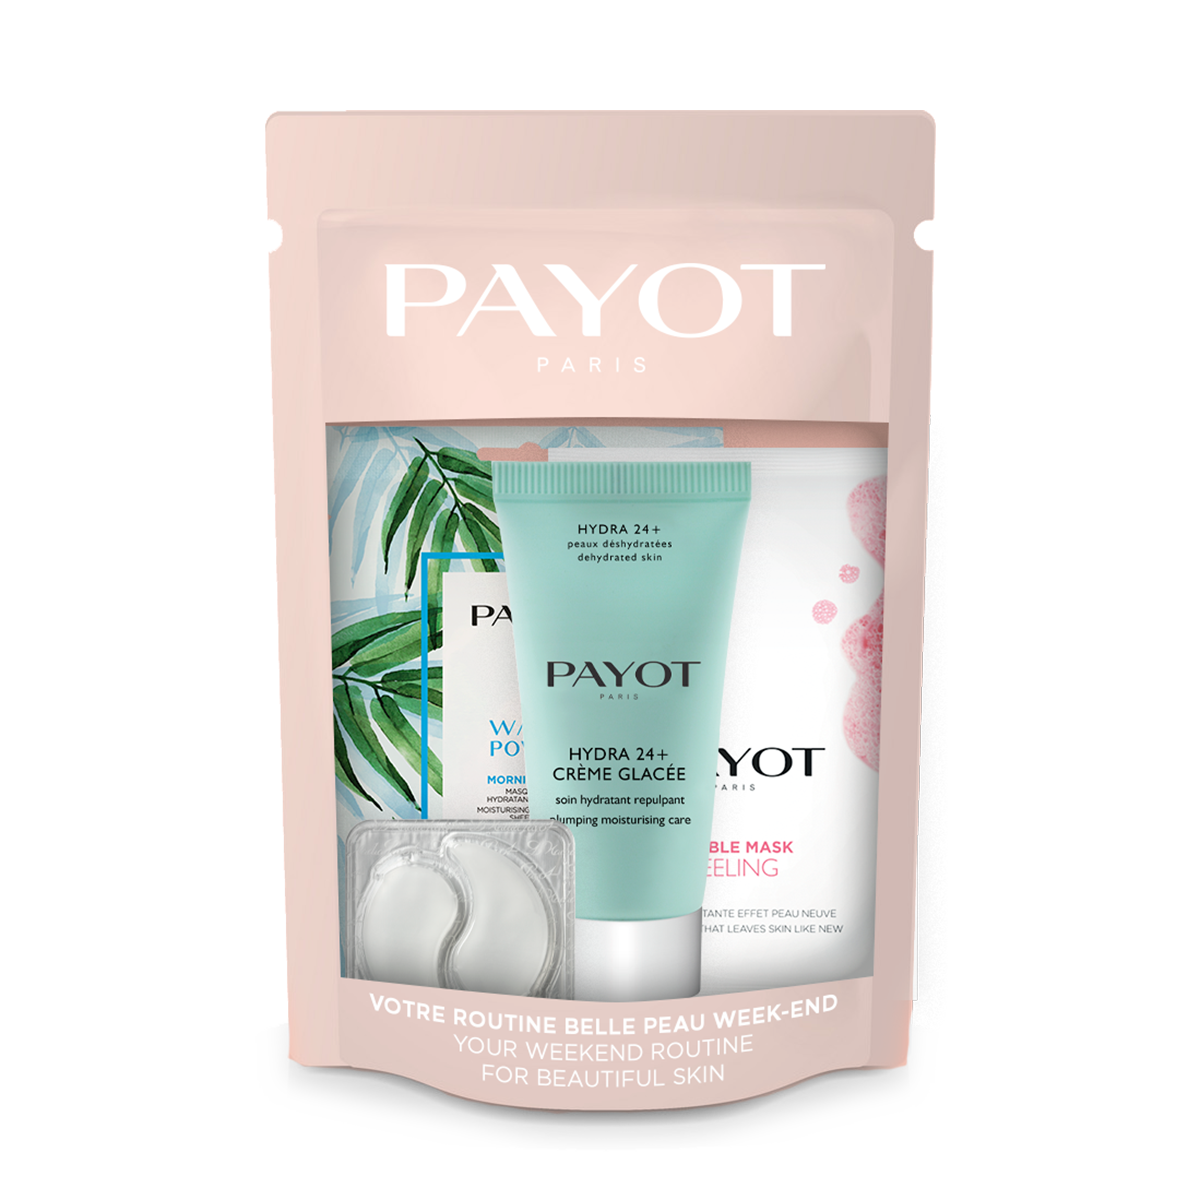 Payot Travel Kit